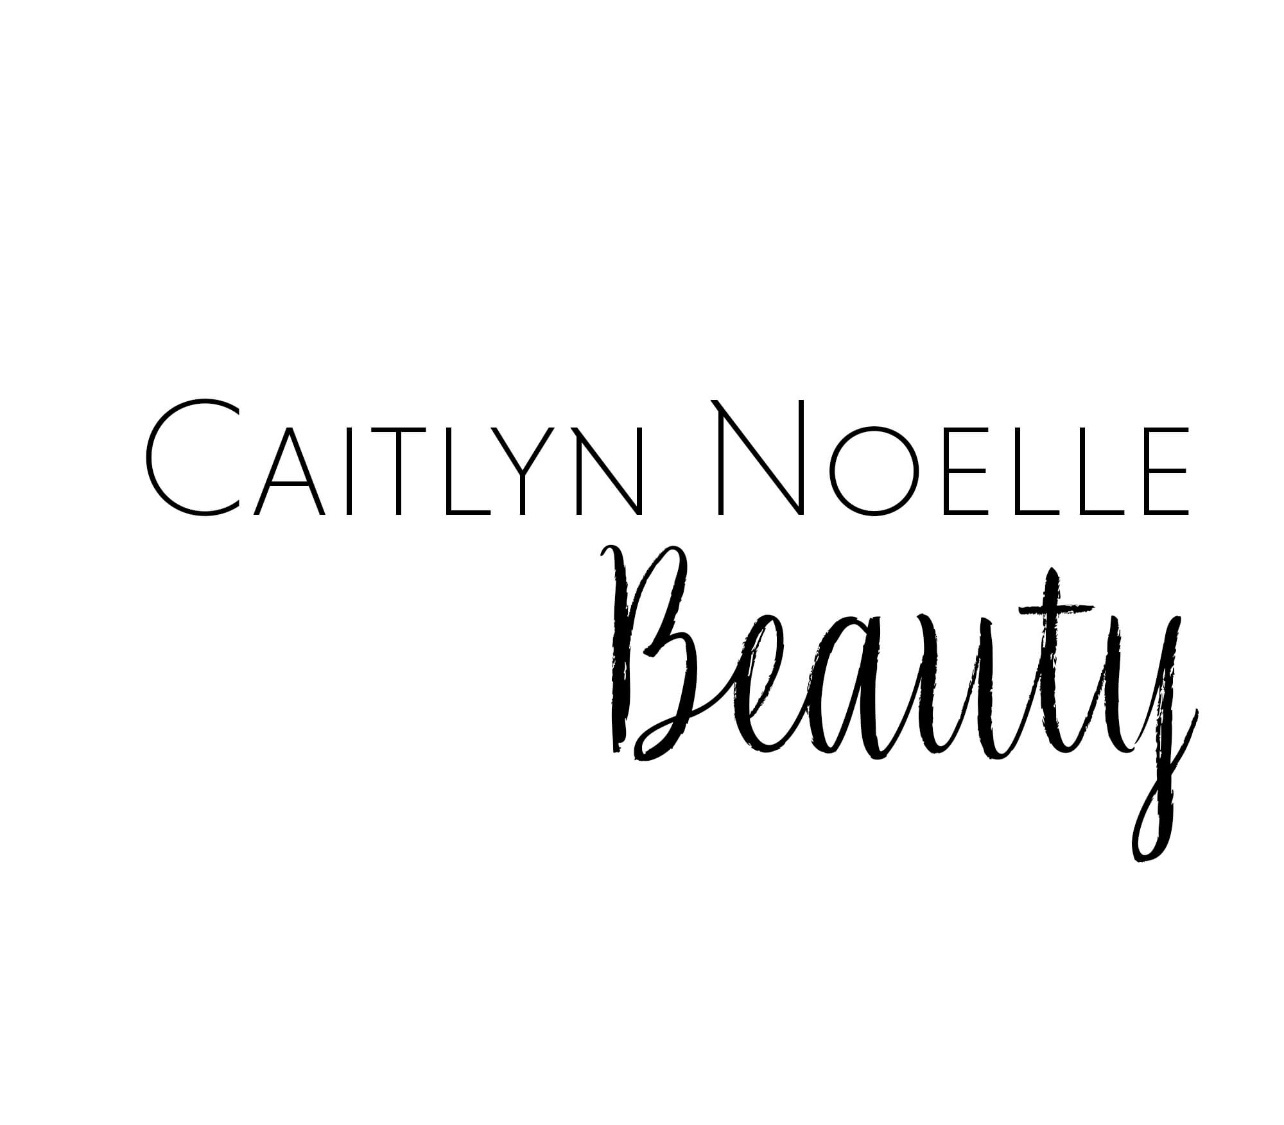 Caitlyn noelle beauty